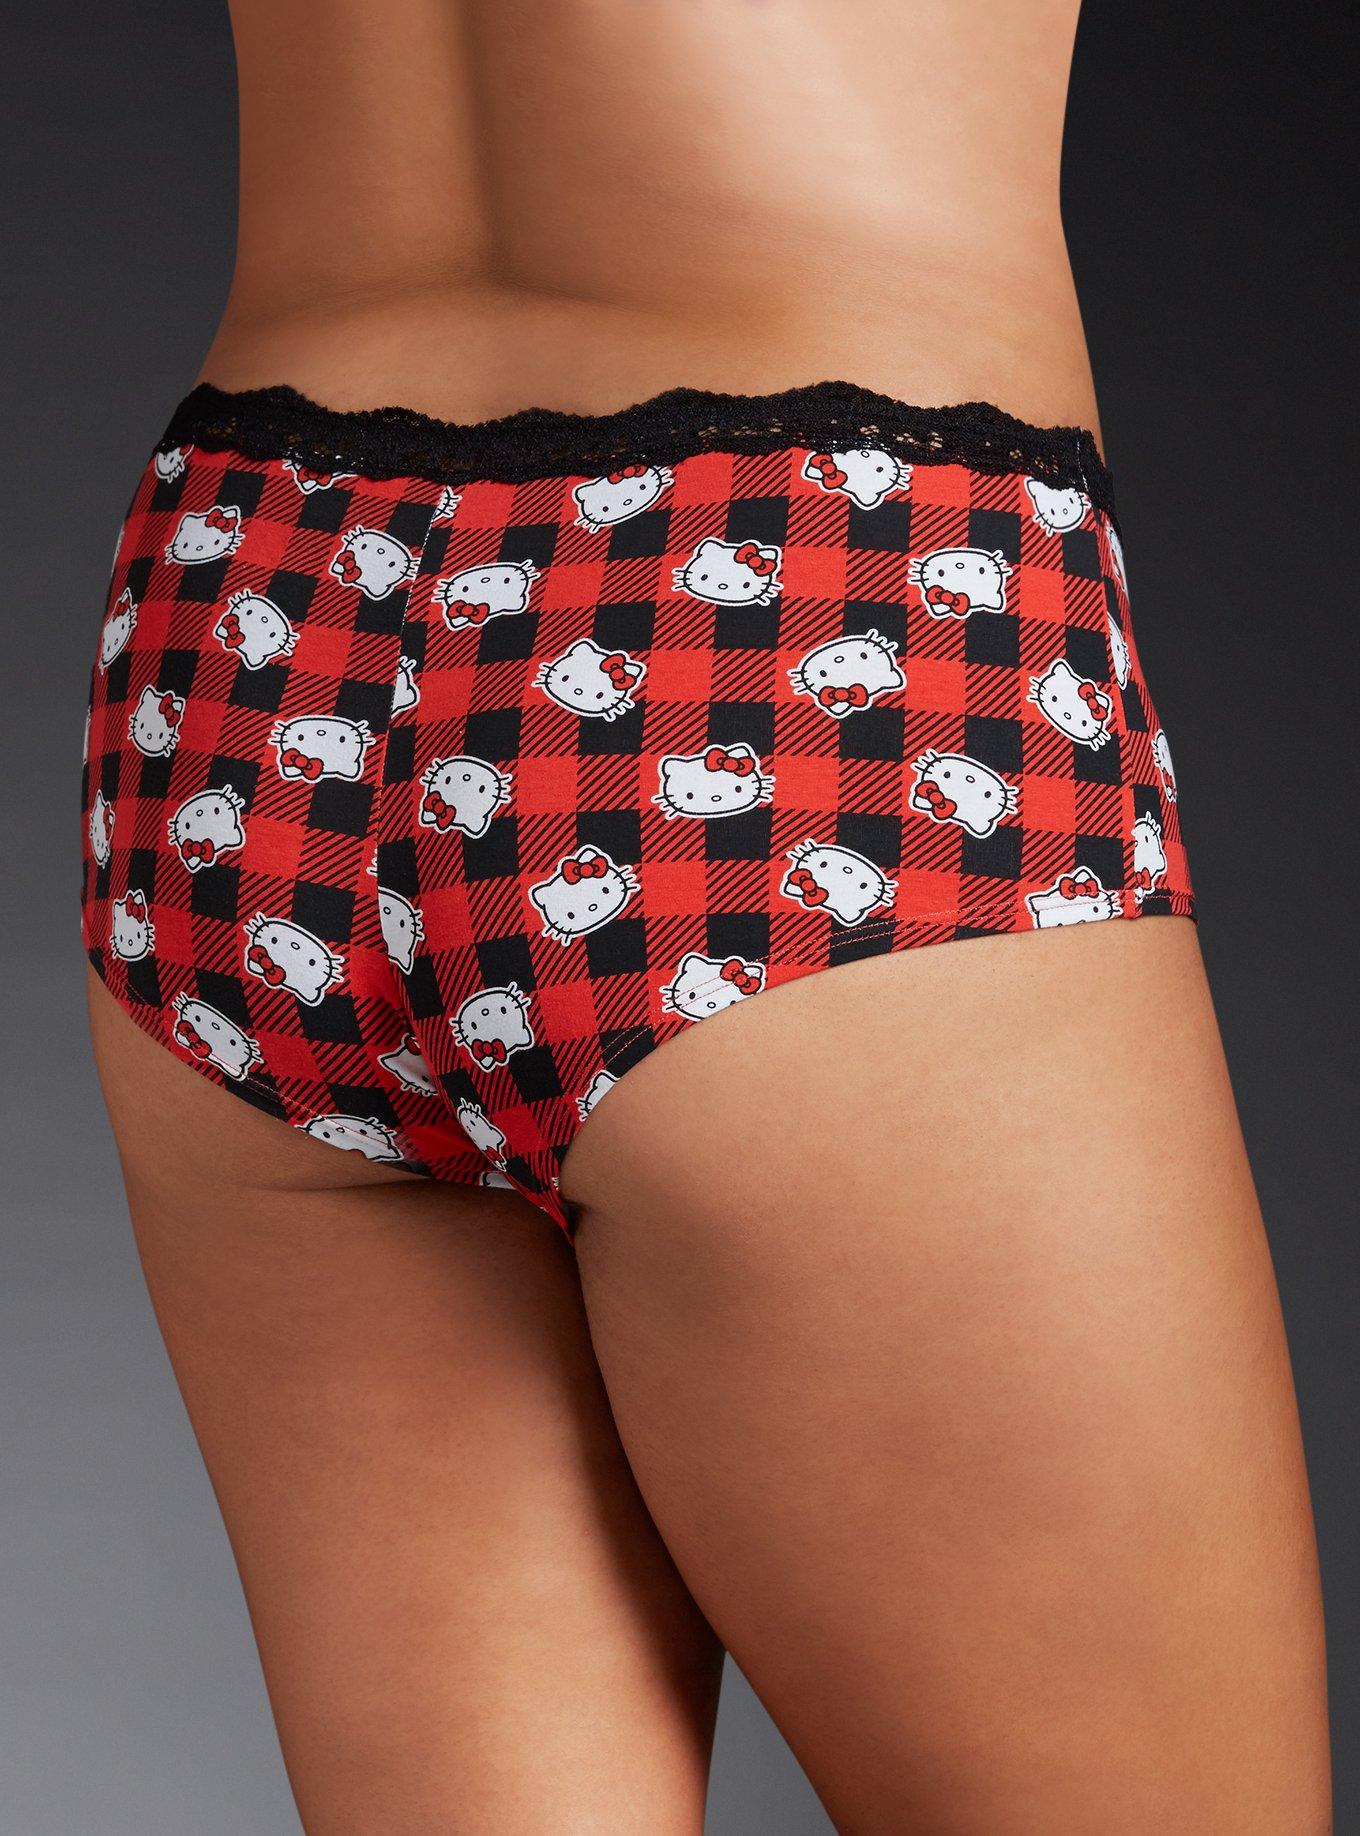 Shop Hello Kitty Underwear For Women online - Mar 2024